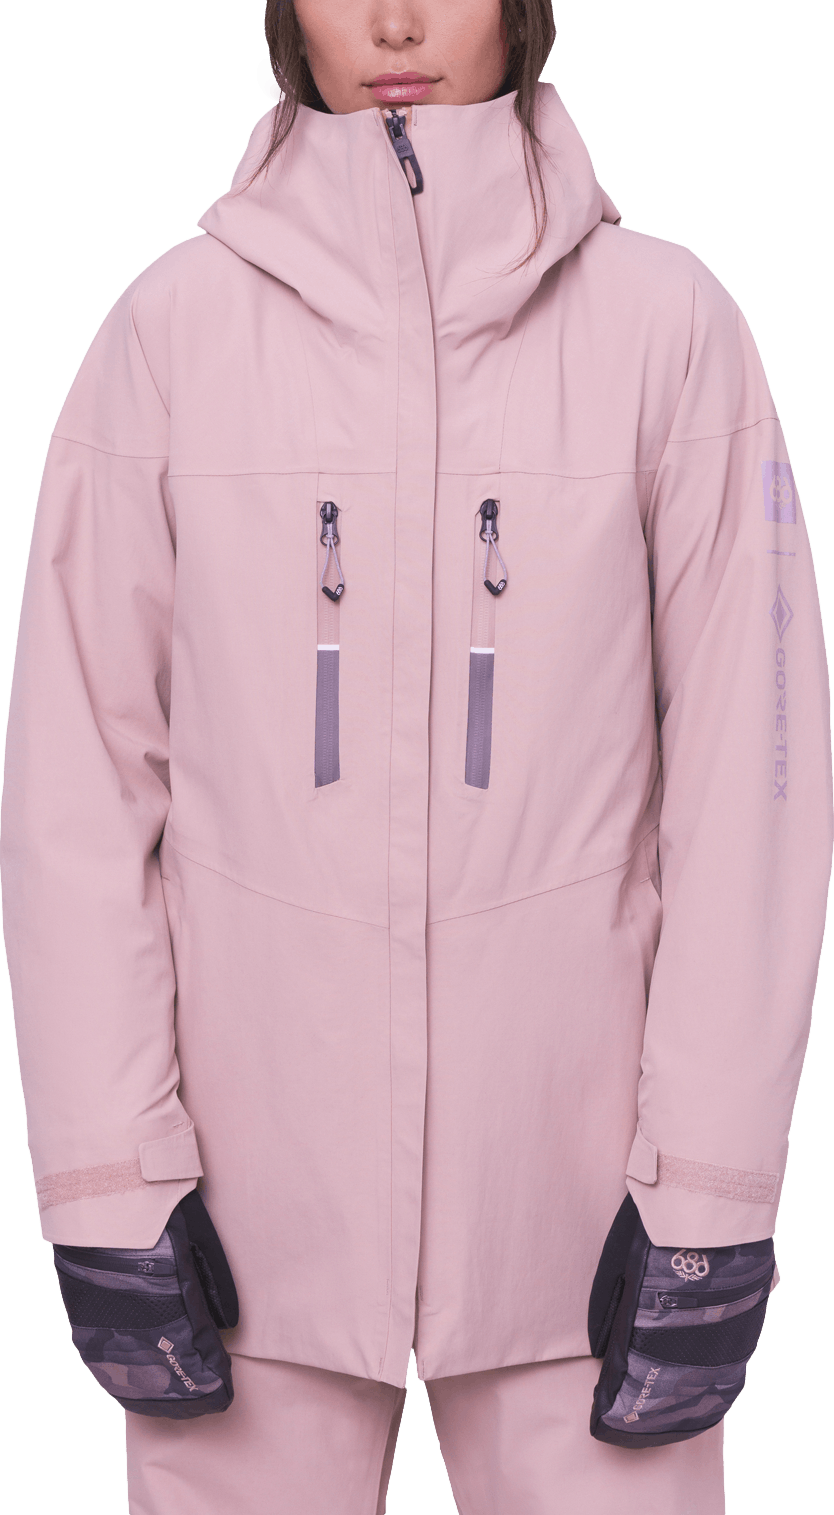 686 Women's GORE-TEX Skyline Jacket